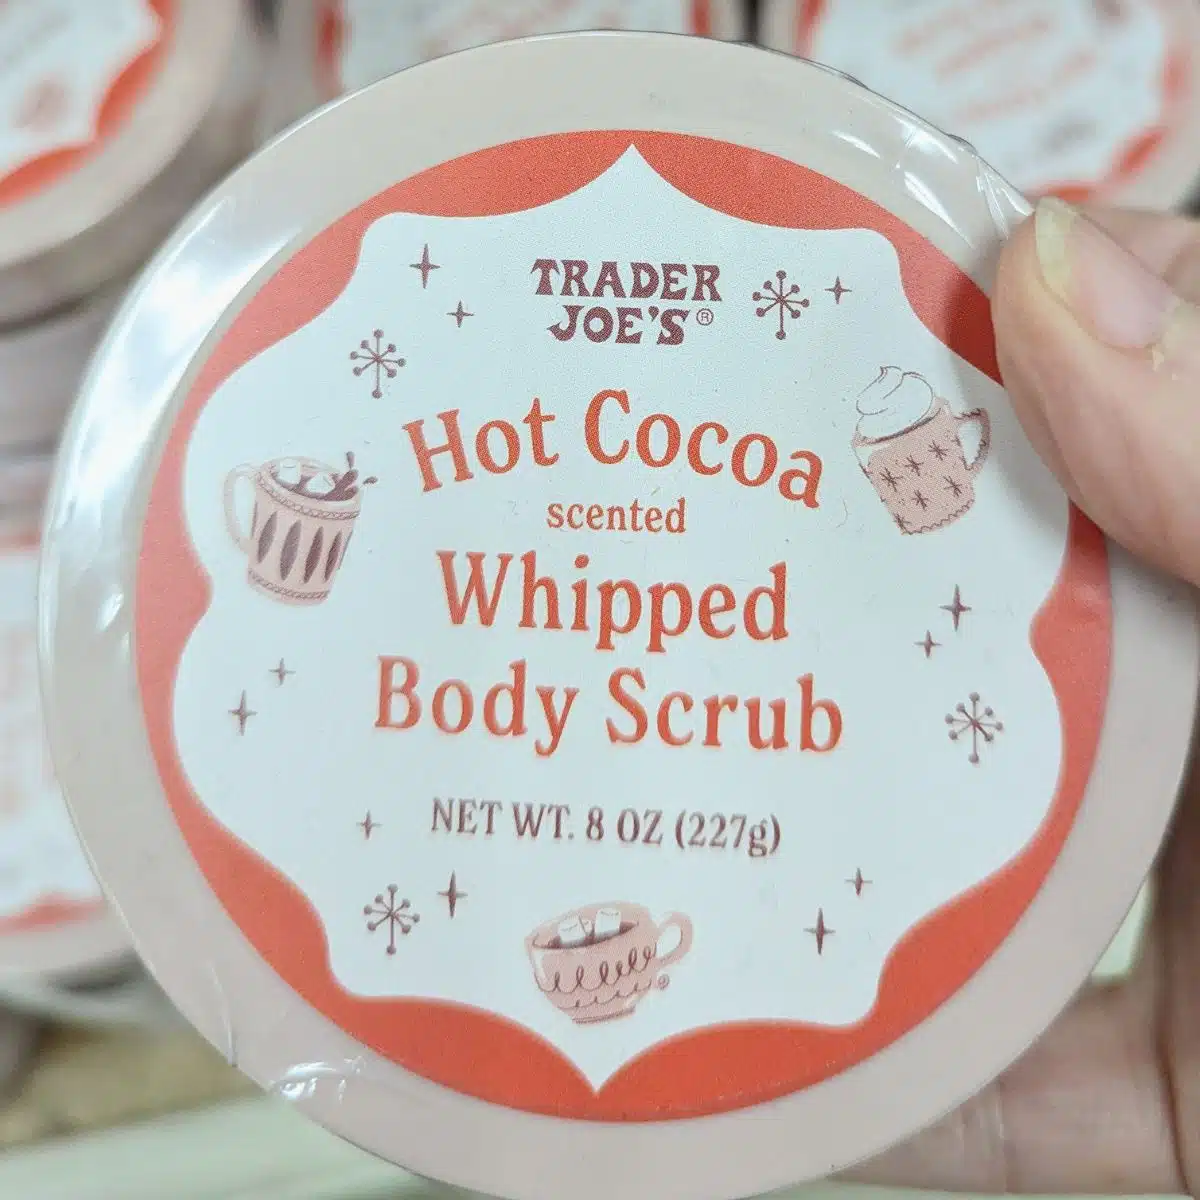 Trader joes Hot Cocoa Whipped Body Scrub